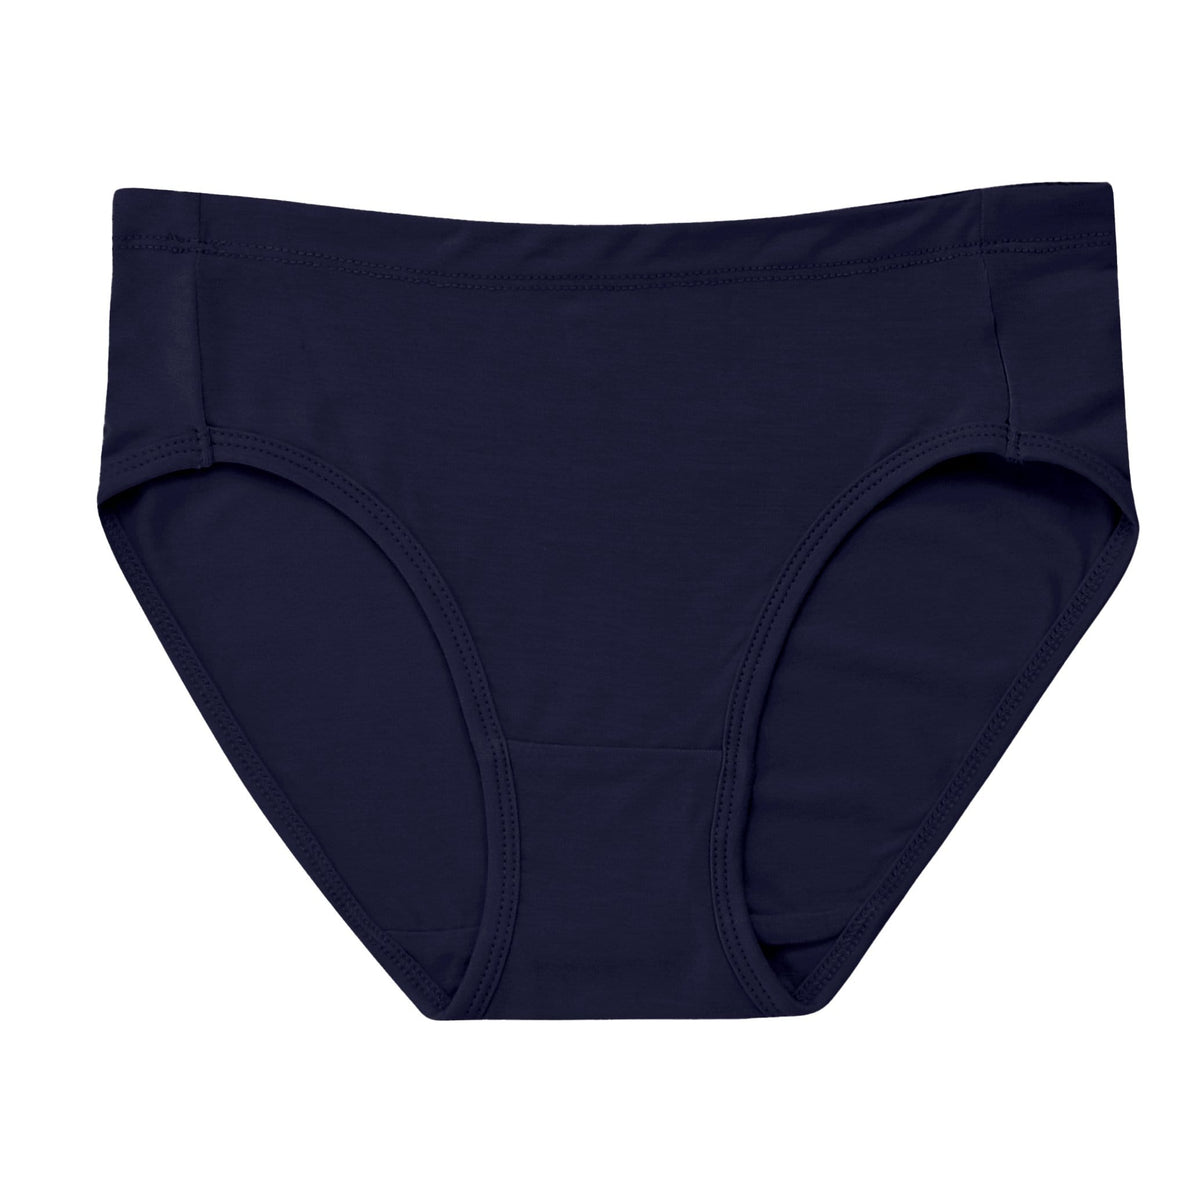 Buy Womens Underwear Products Online in Oslo at Best Prices on desertcart  Norway